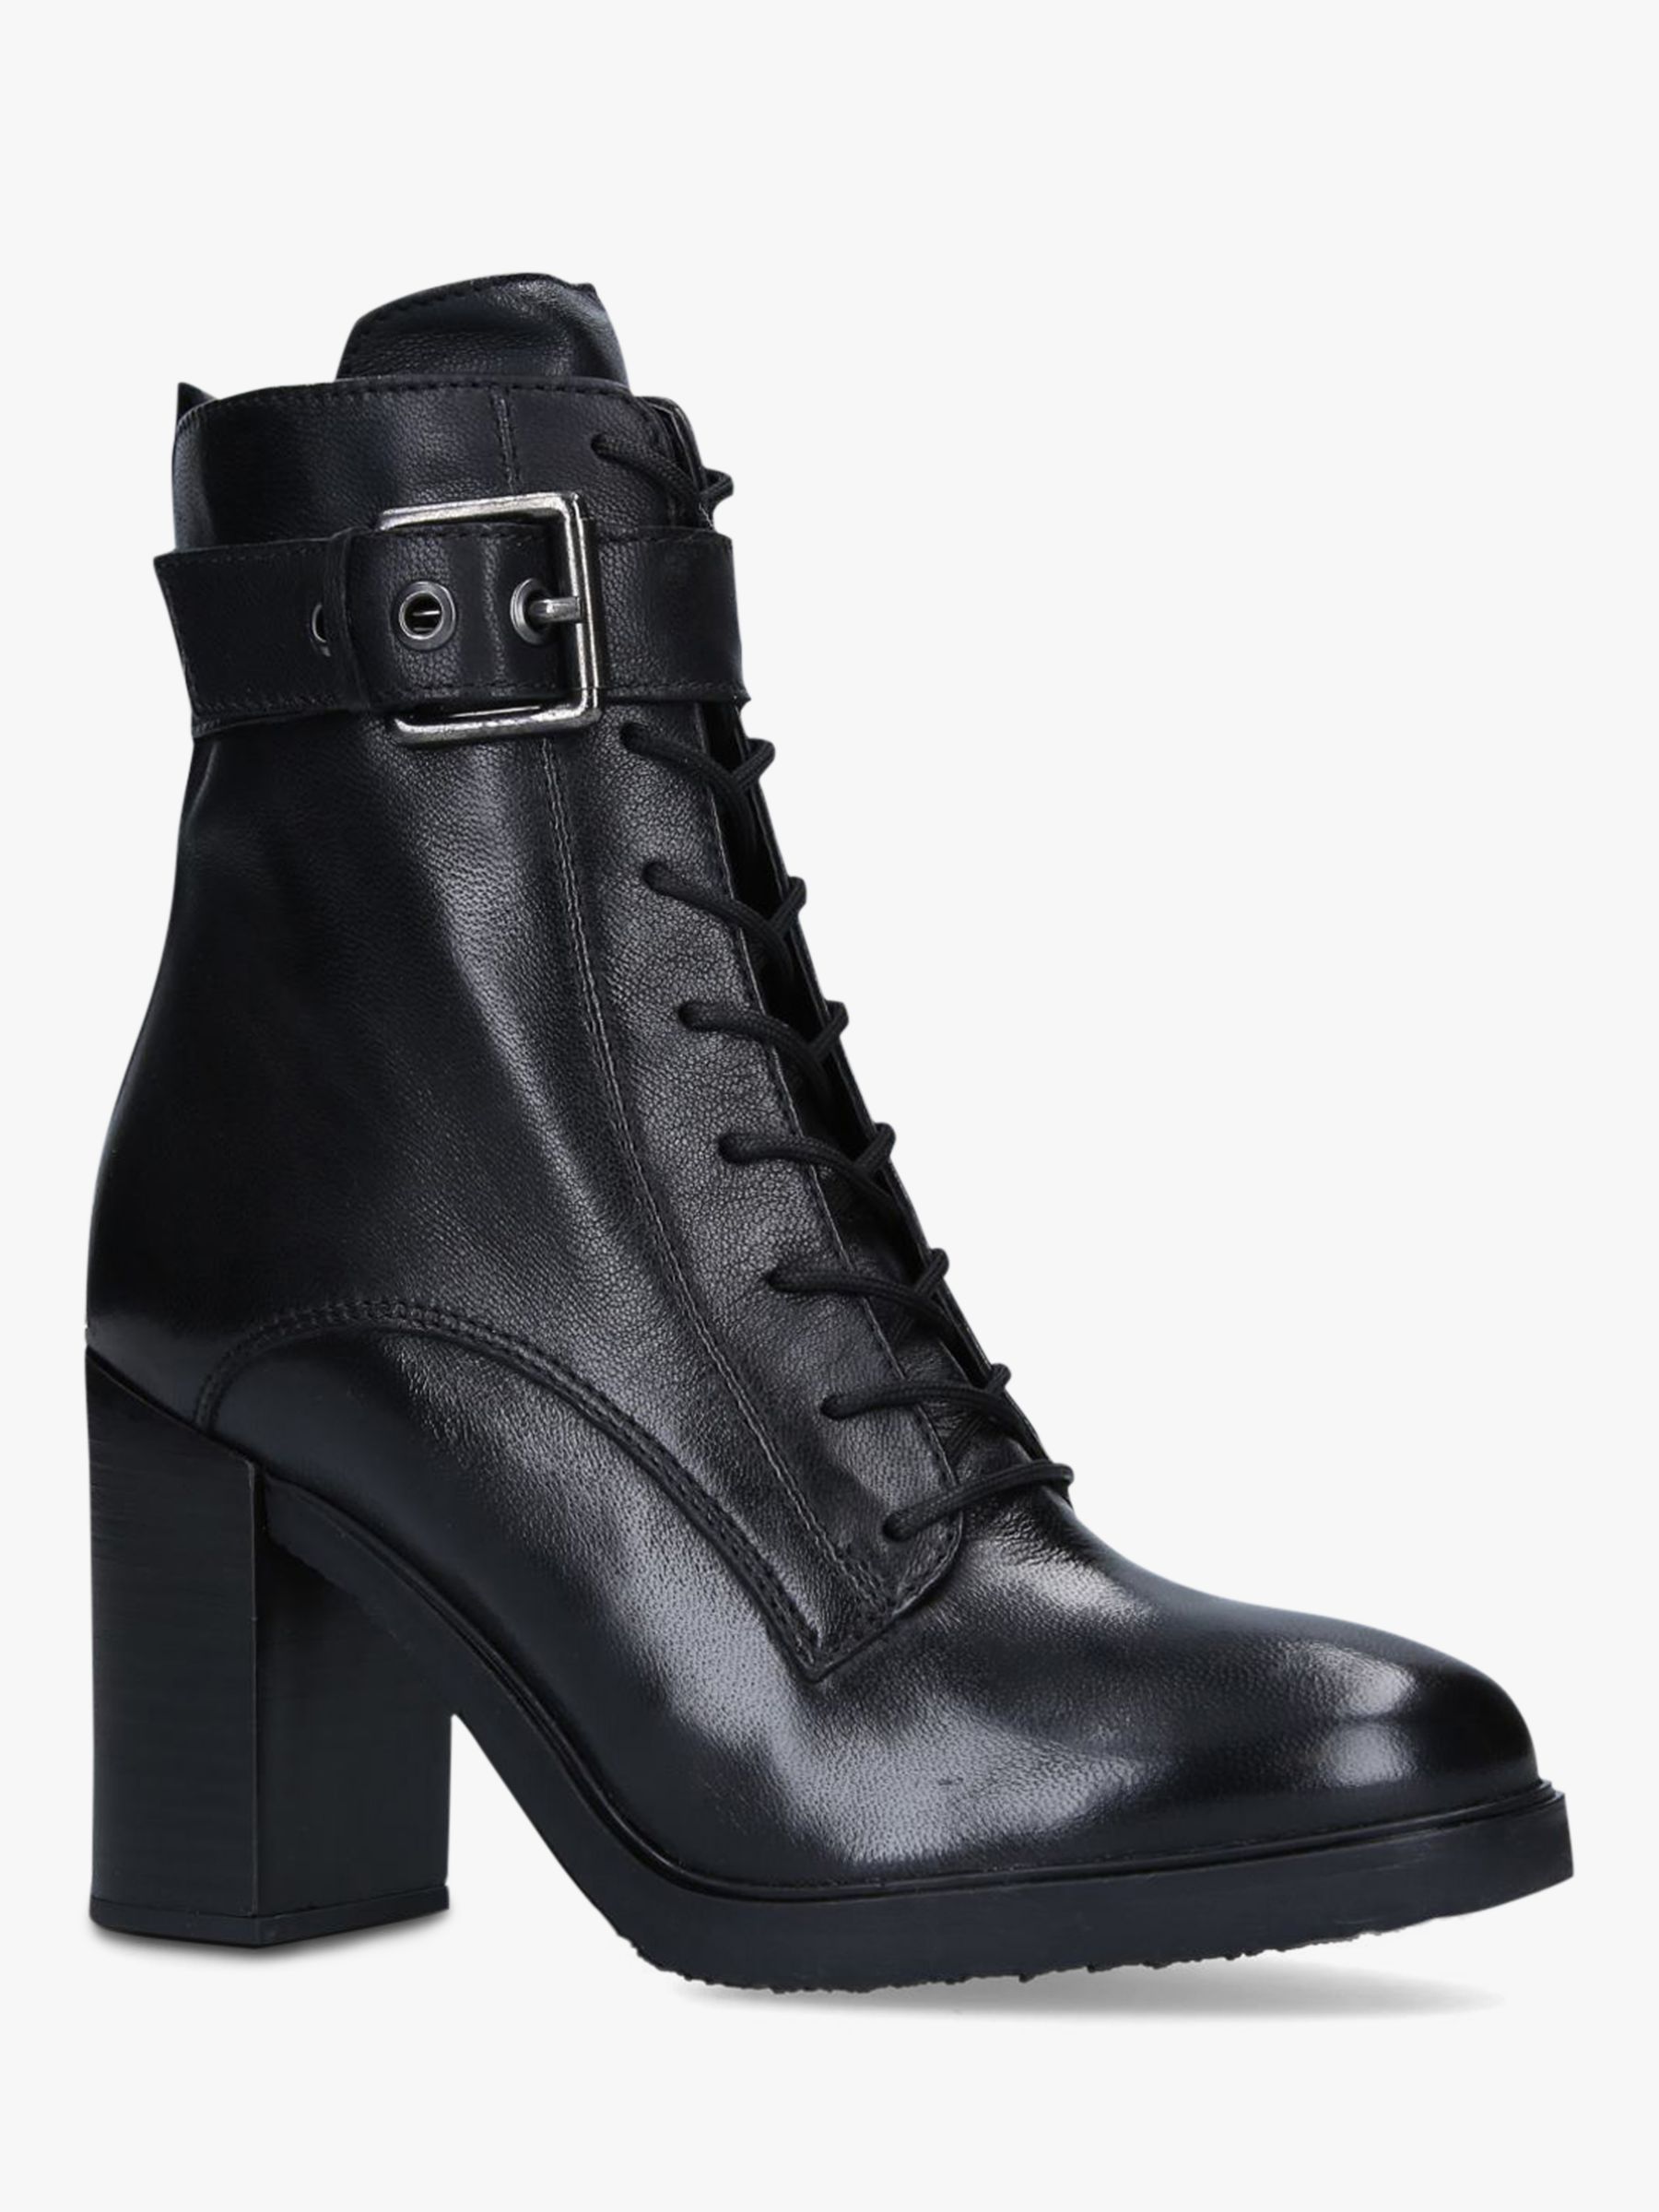 Carvela Sidewalk Leather Ankle Boots, Black at John Lewis & Partners